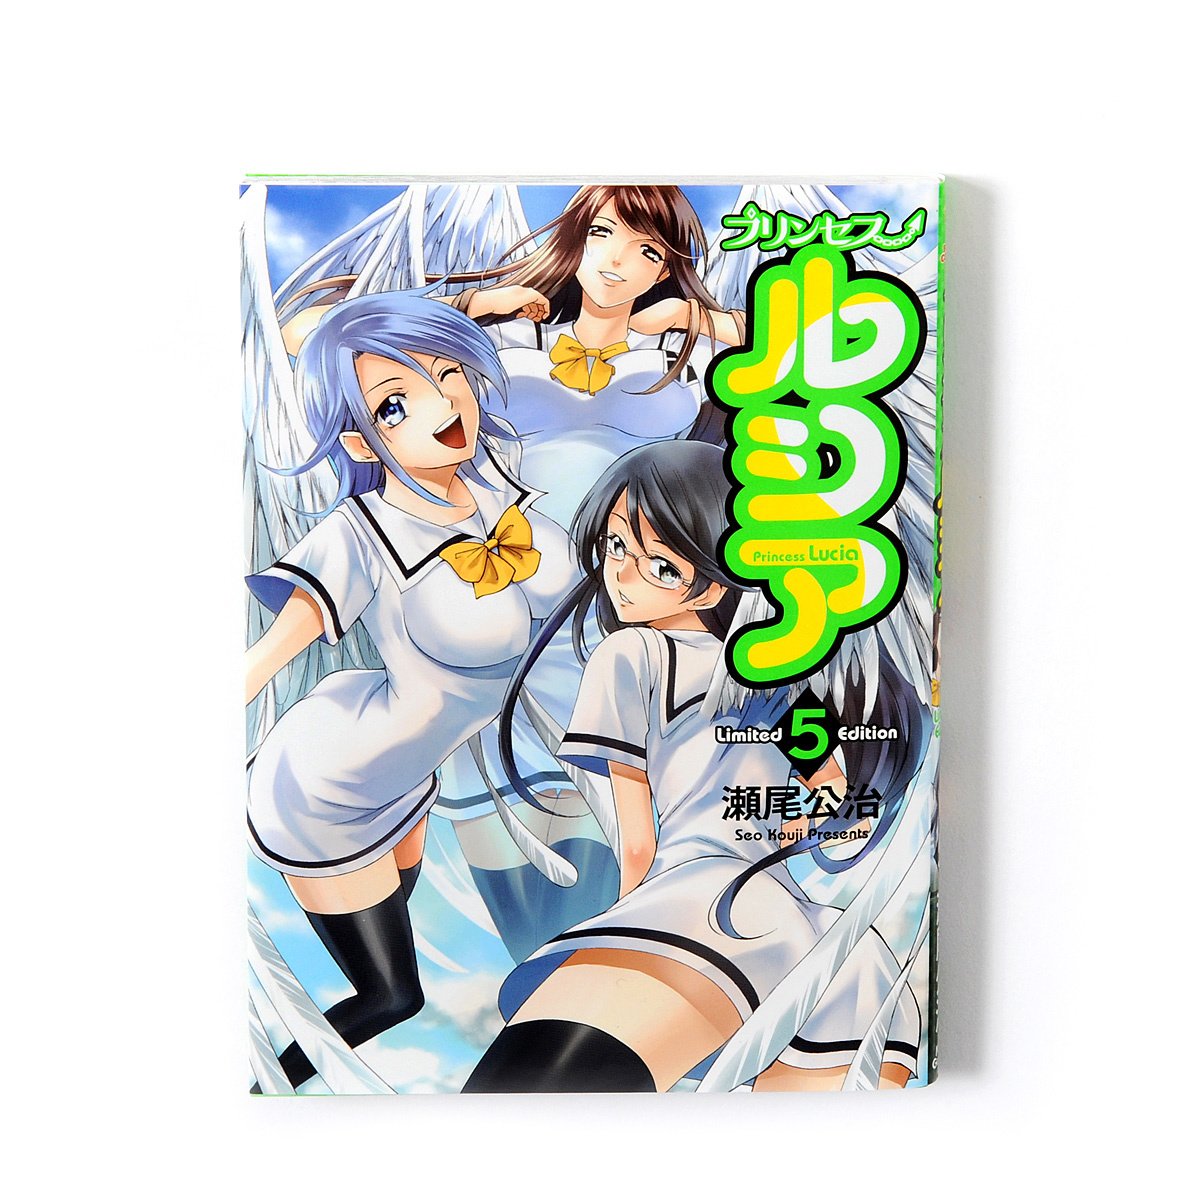 Princess Lucia Vol. 5 Limited Edition w/ Booklet - Tokyo Otaku Mode (TOM)